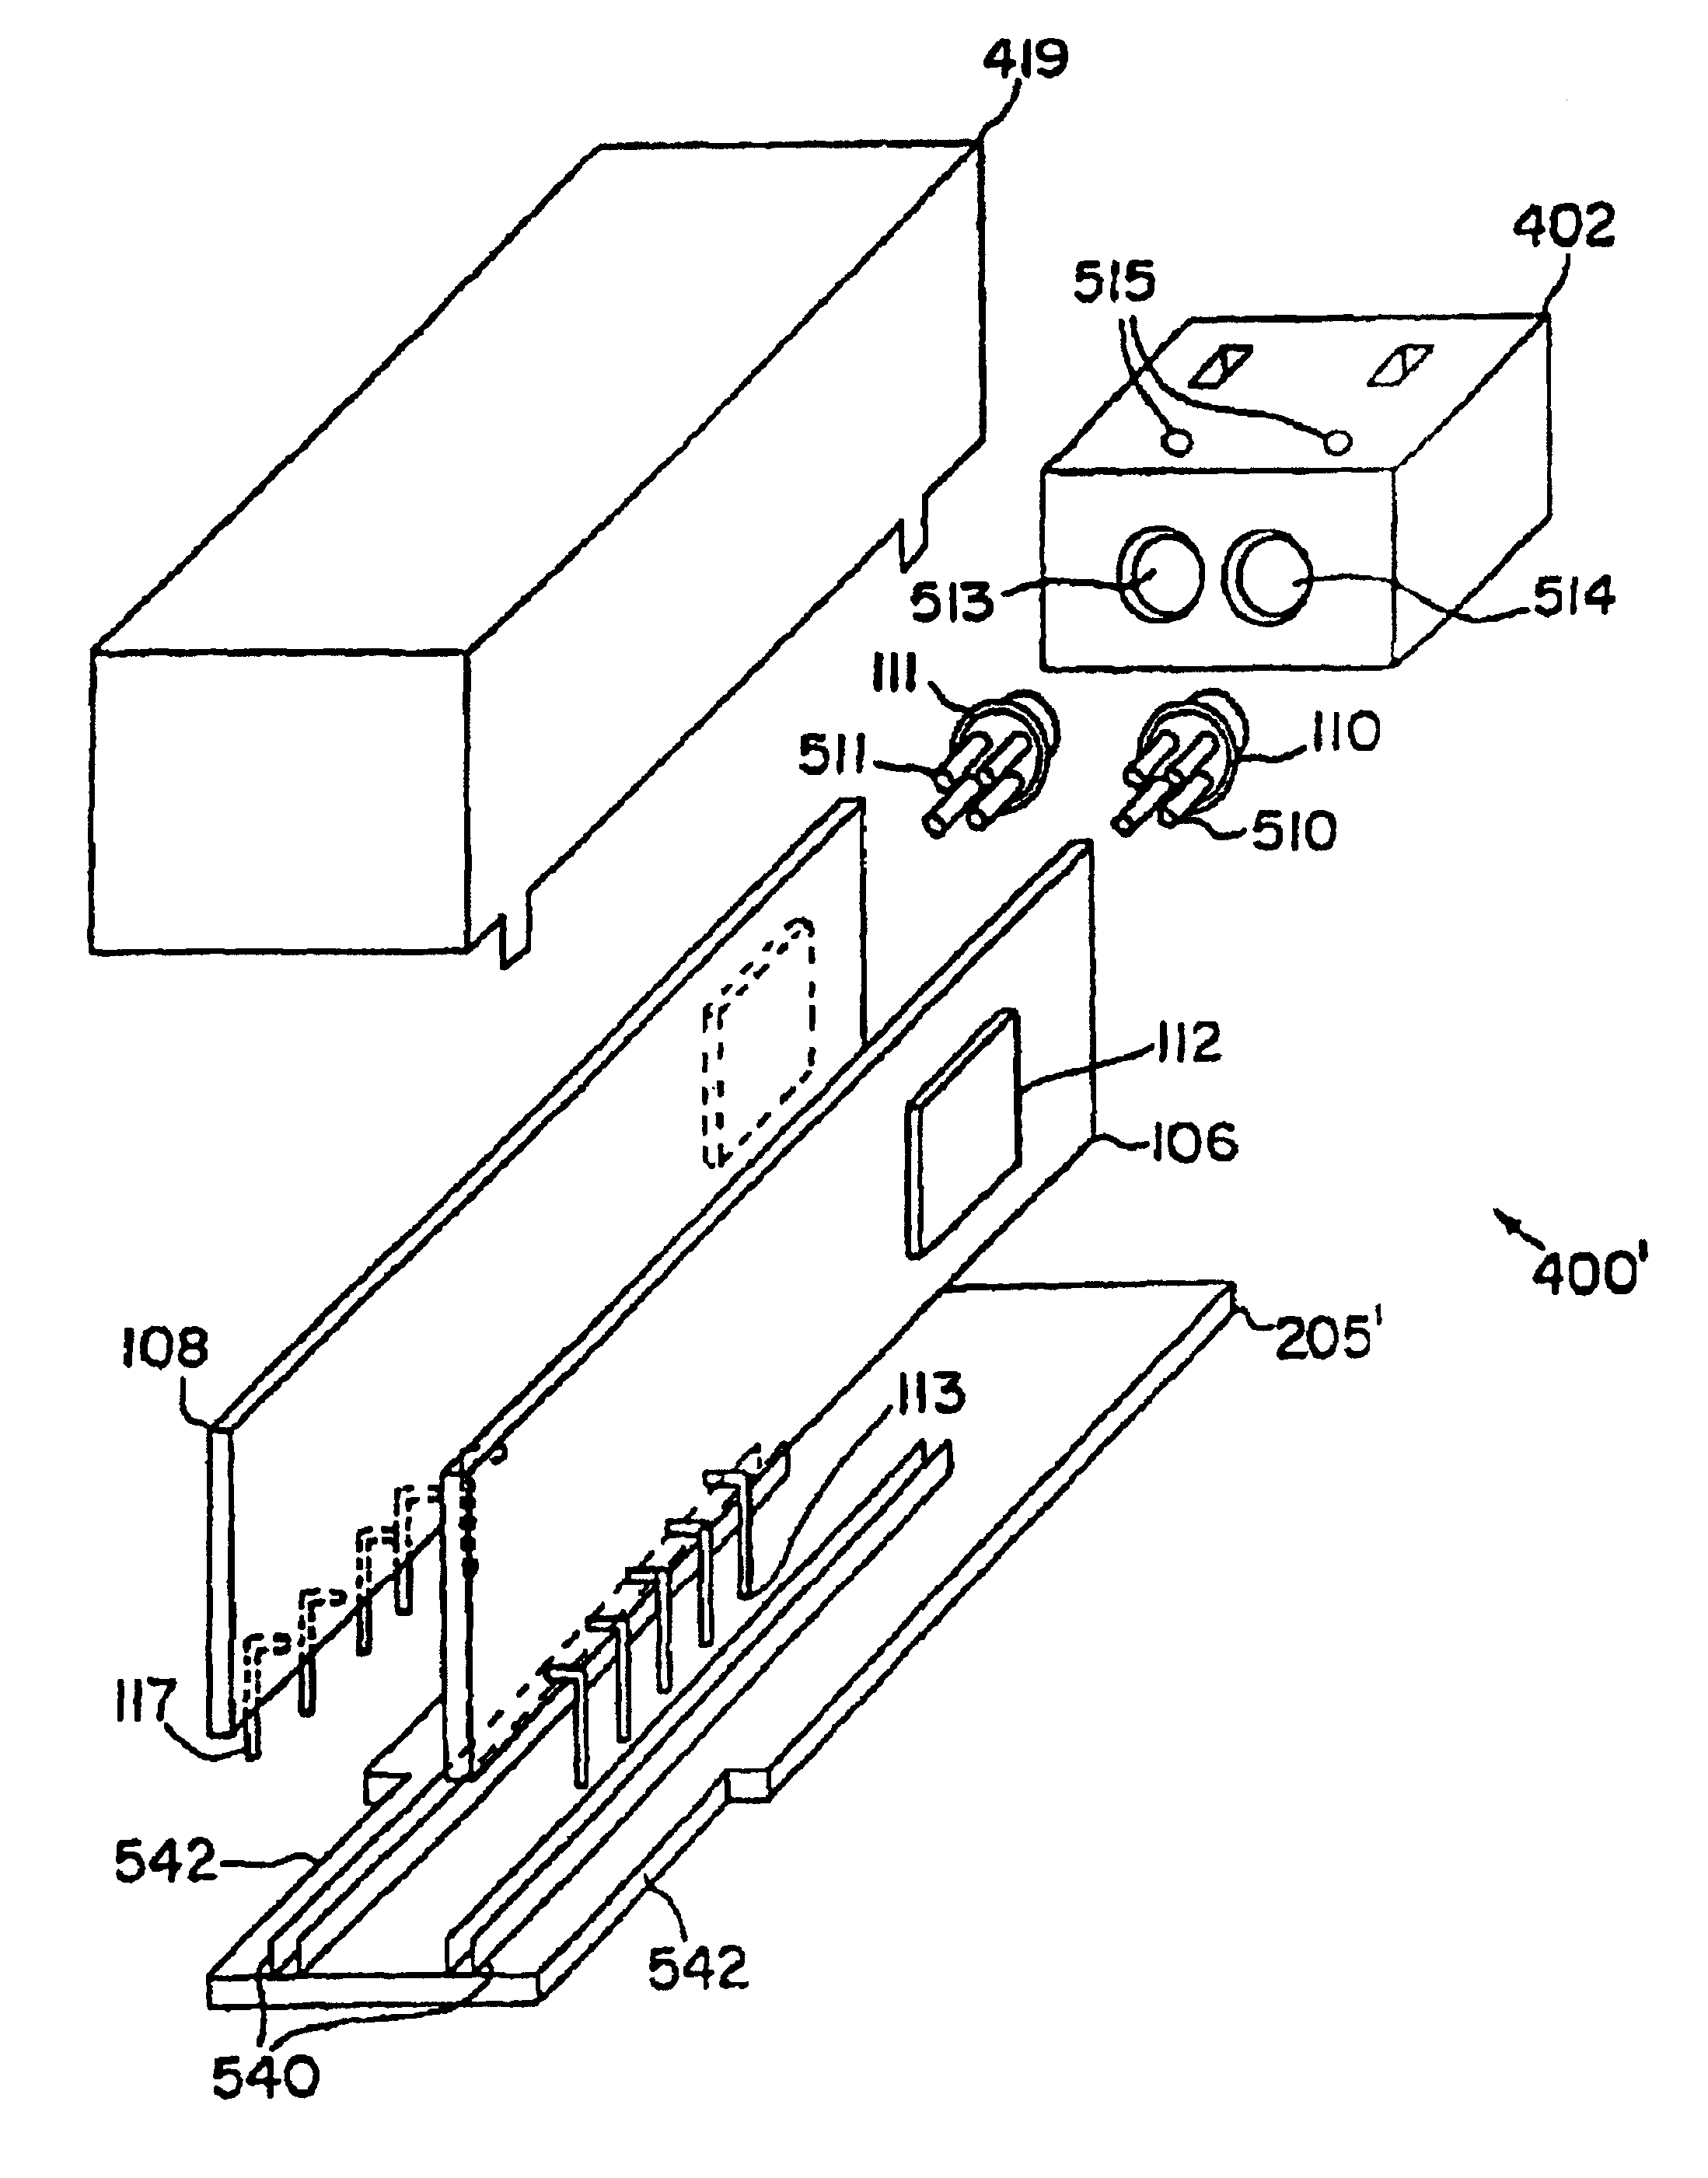 Method and apparatus for pluggable fiber optic modules